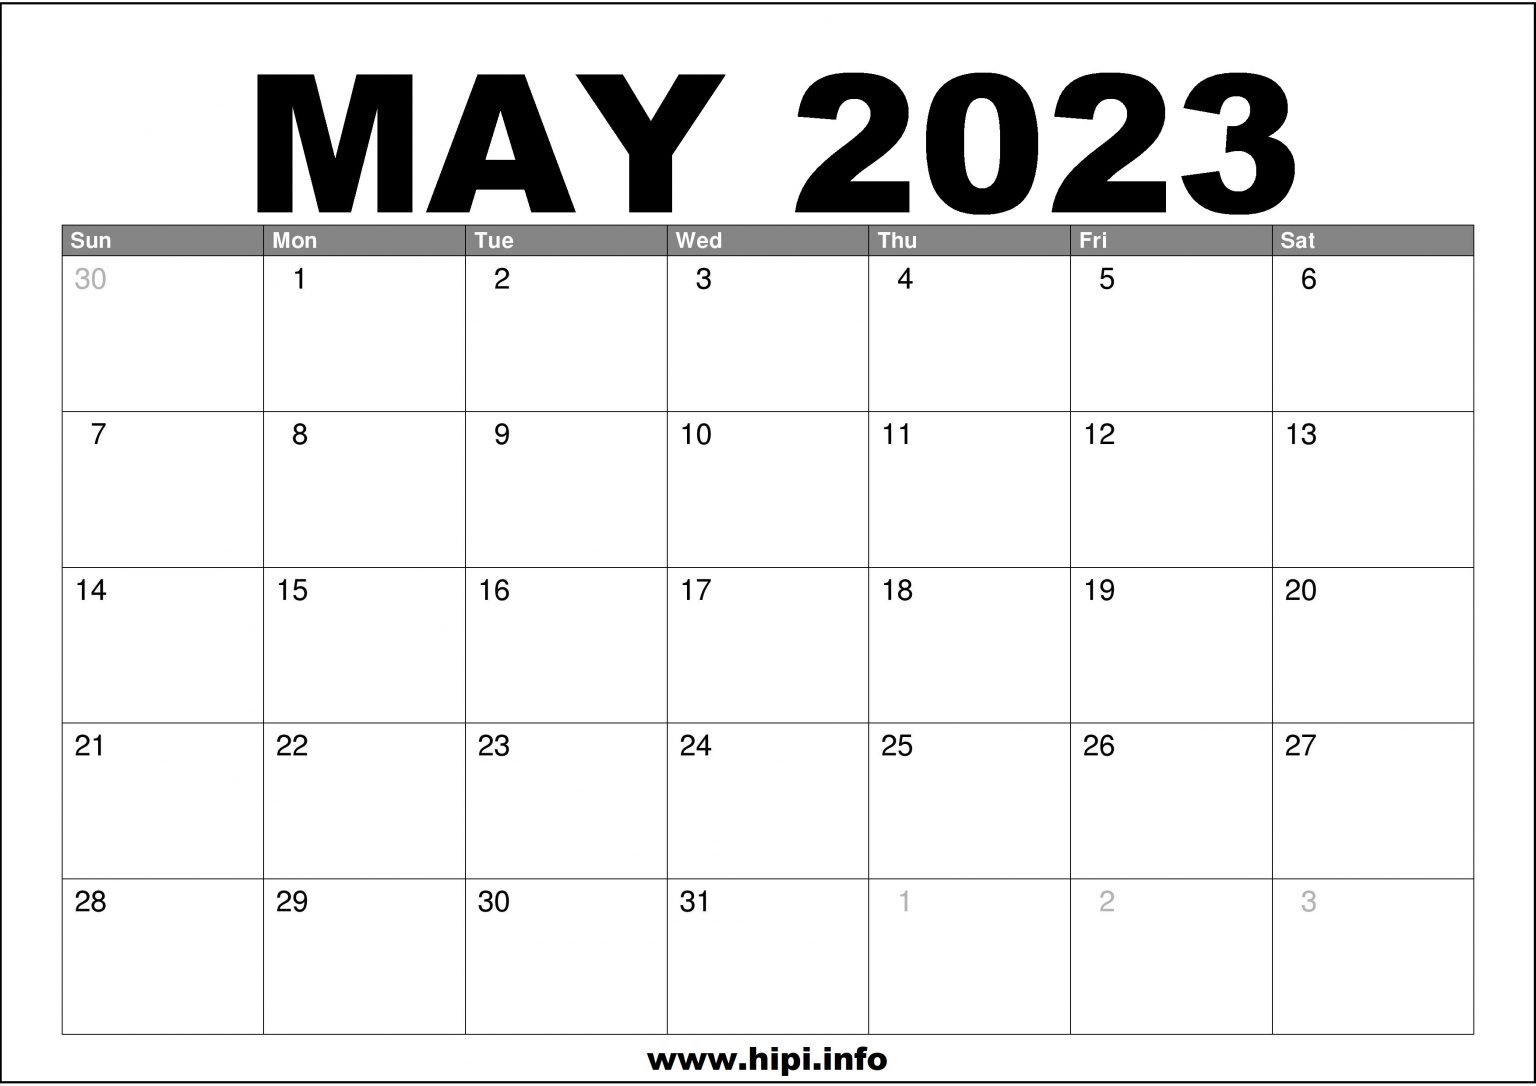 may-2023-calendar-free-printable-hipi-info